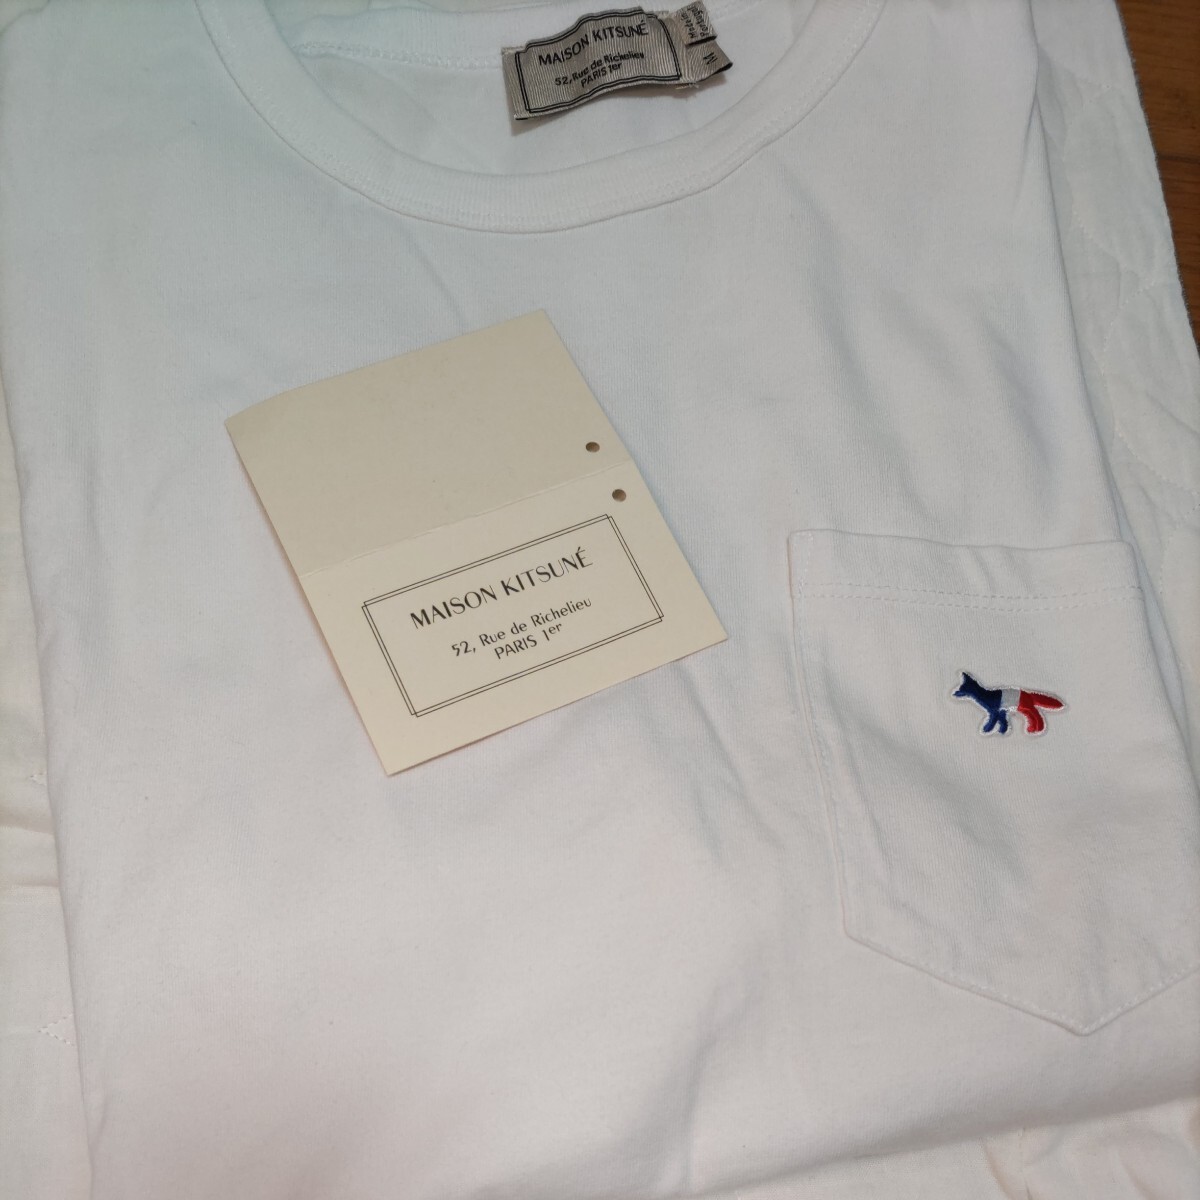  mezzo n fox MAISON KITSUNE standard tricolor fox patch pocket T-shirt white TRICOLOR FOX PATCH